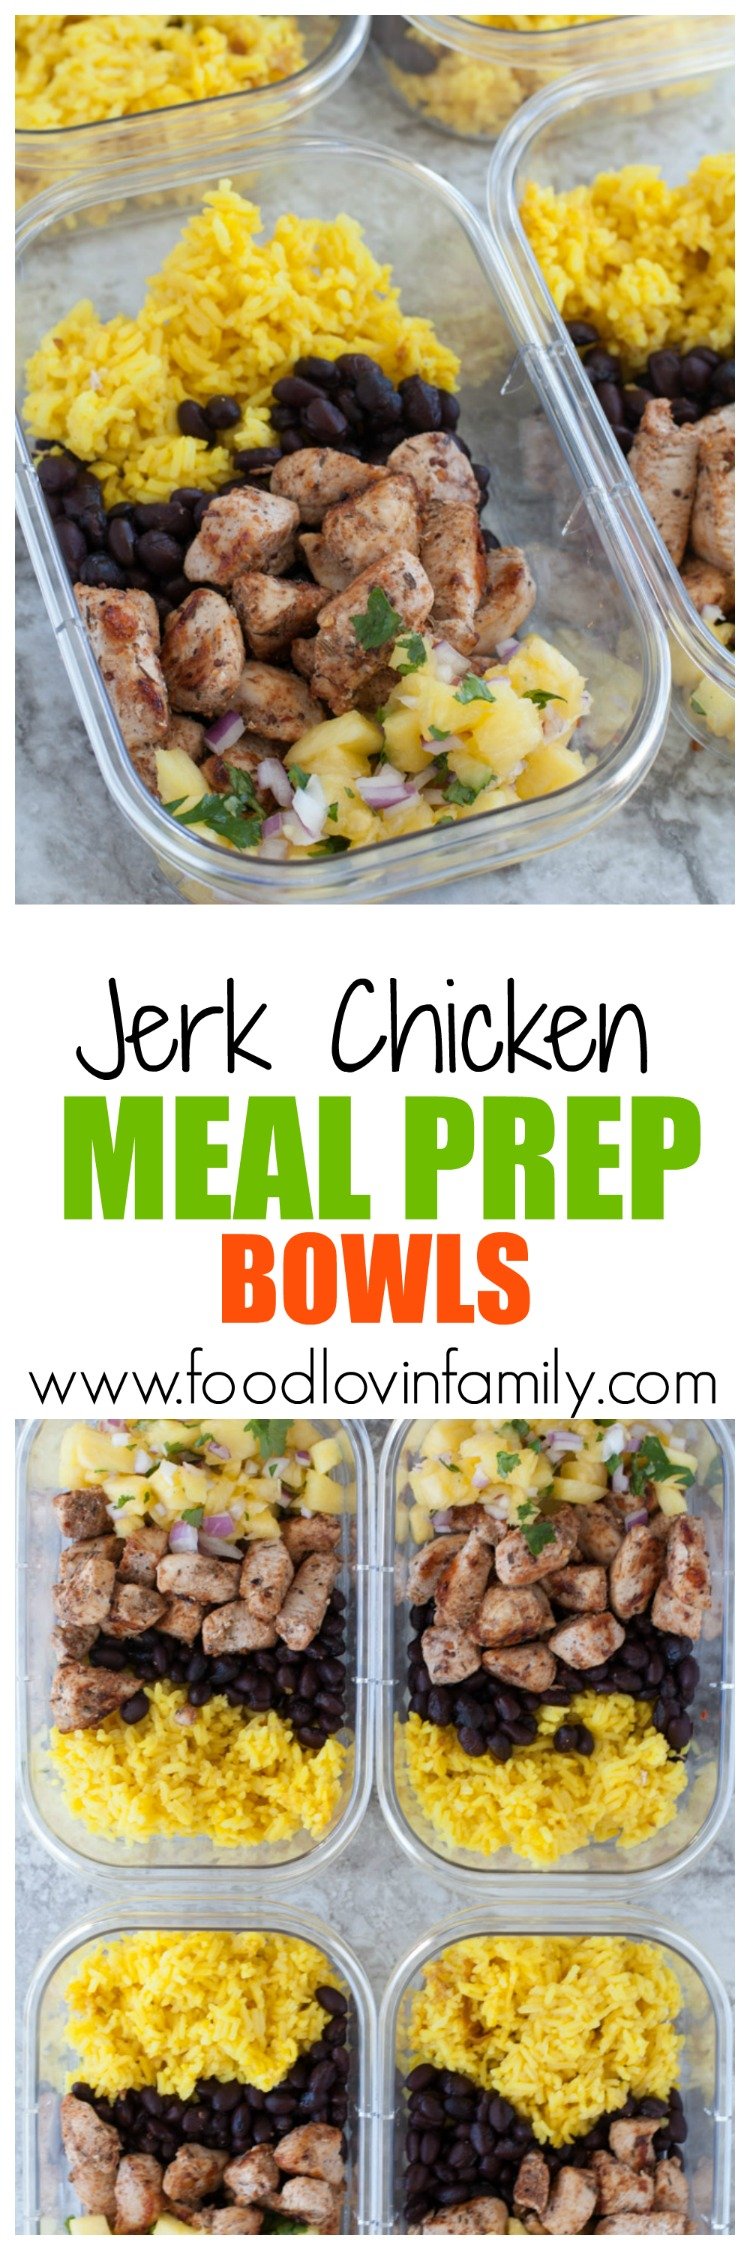 jerk chicken meal prep bowls PIN image